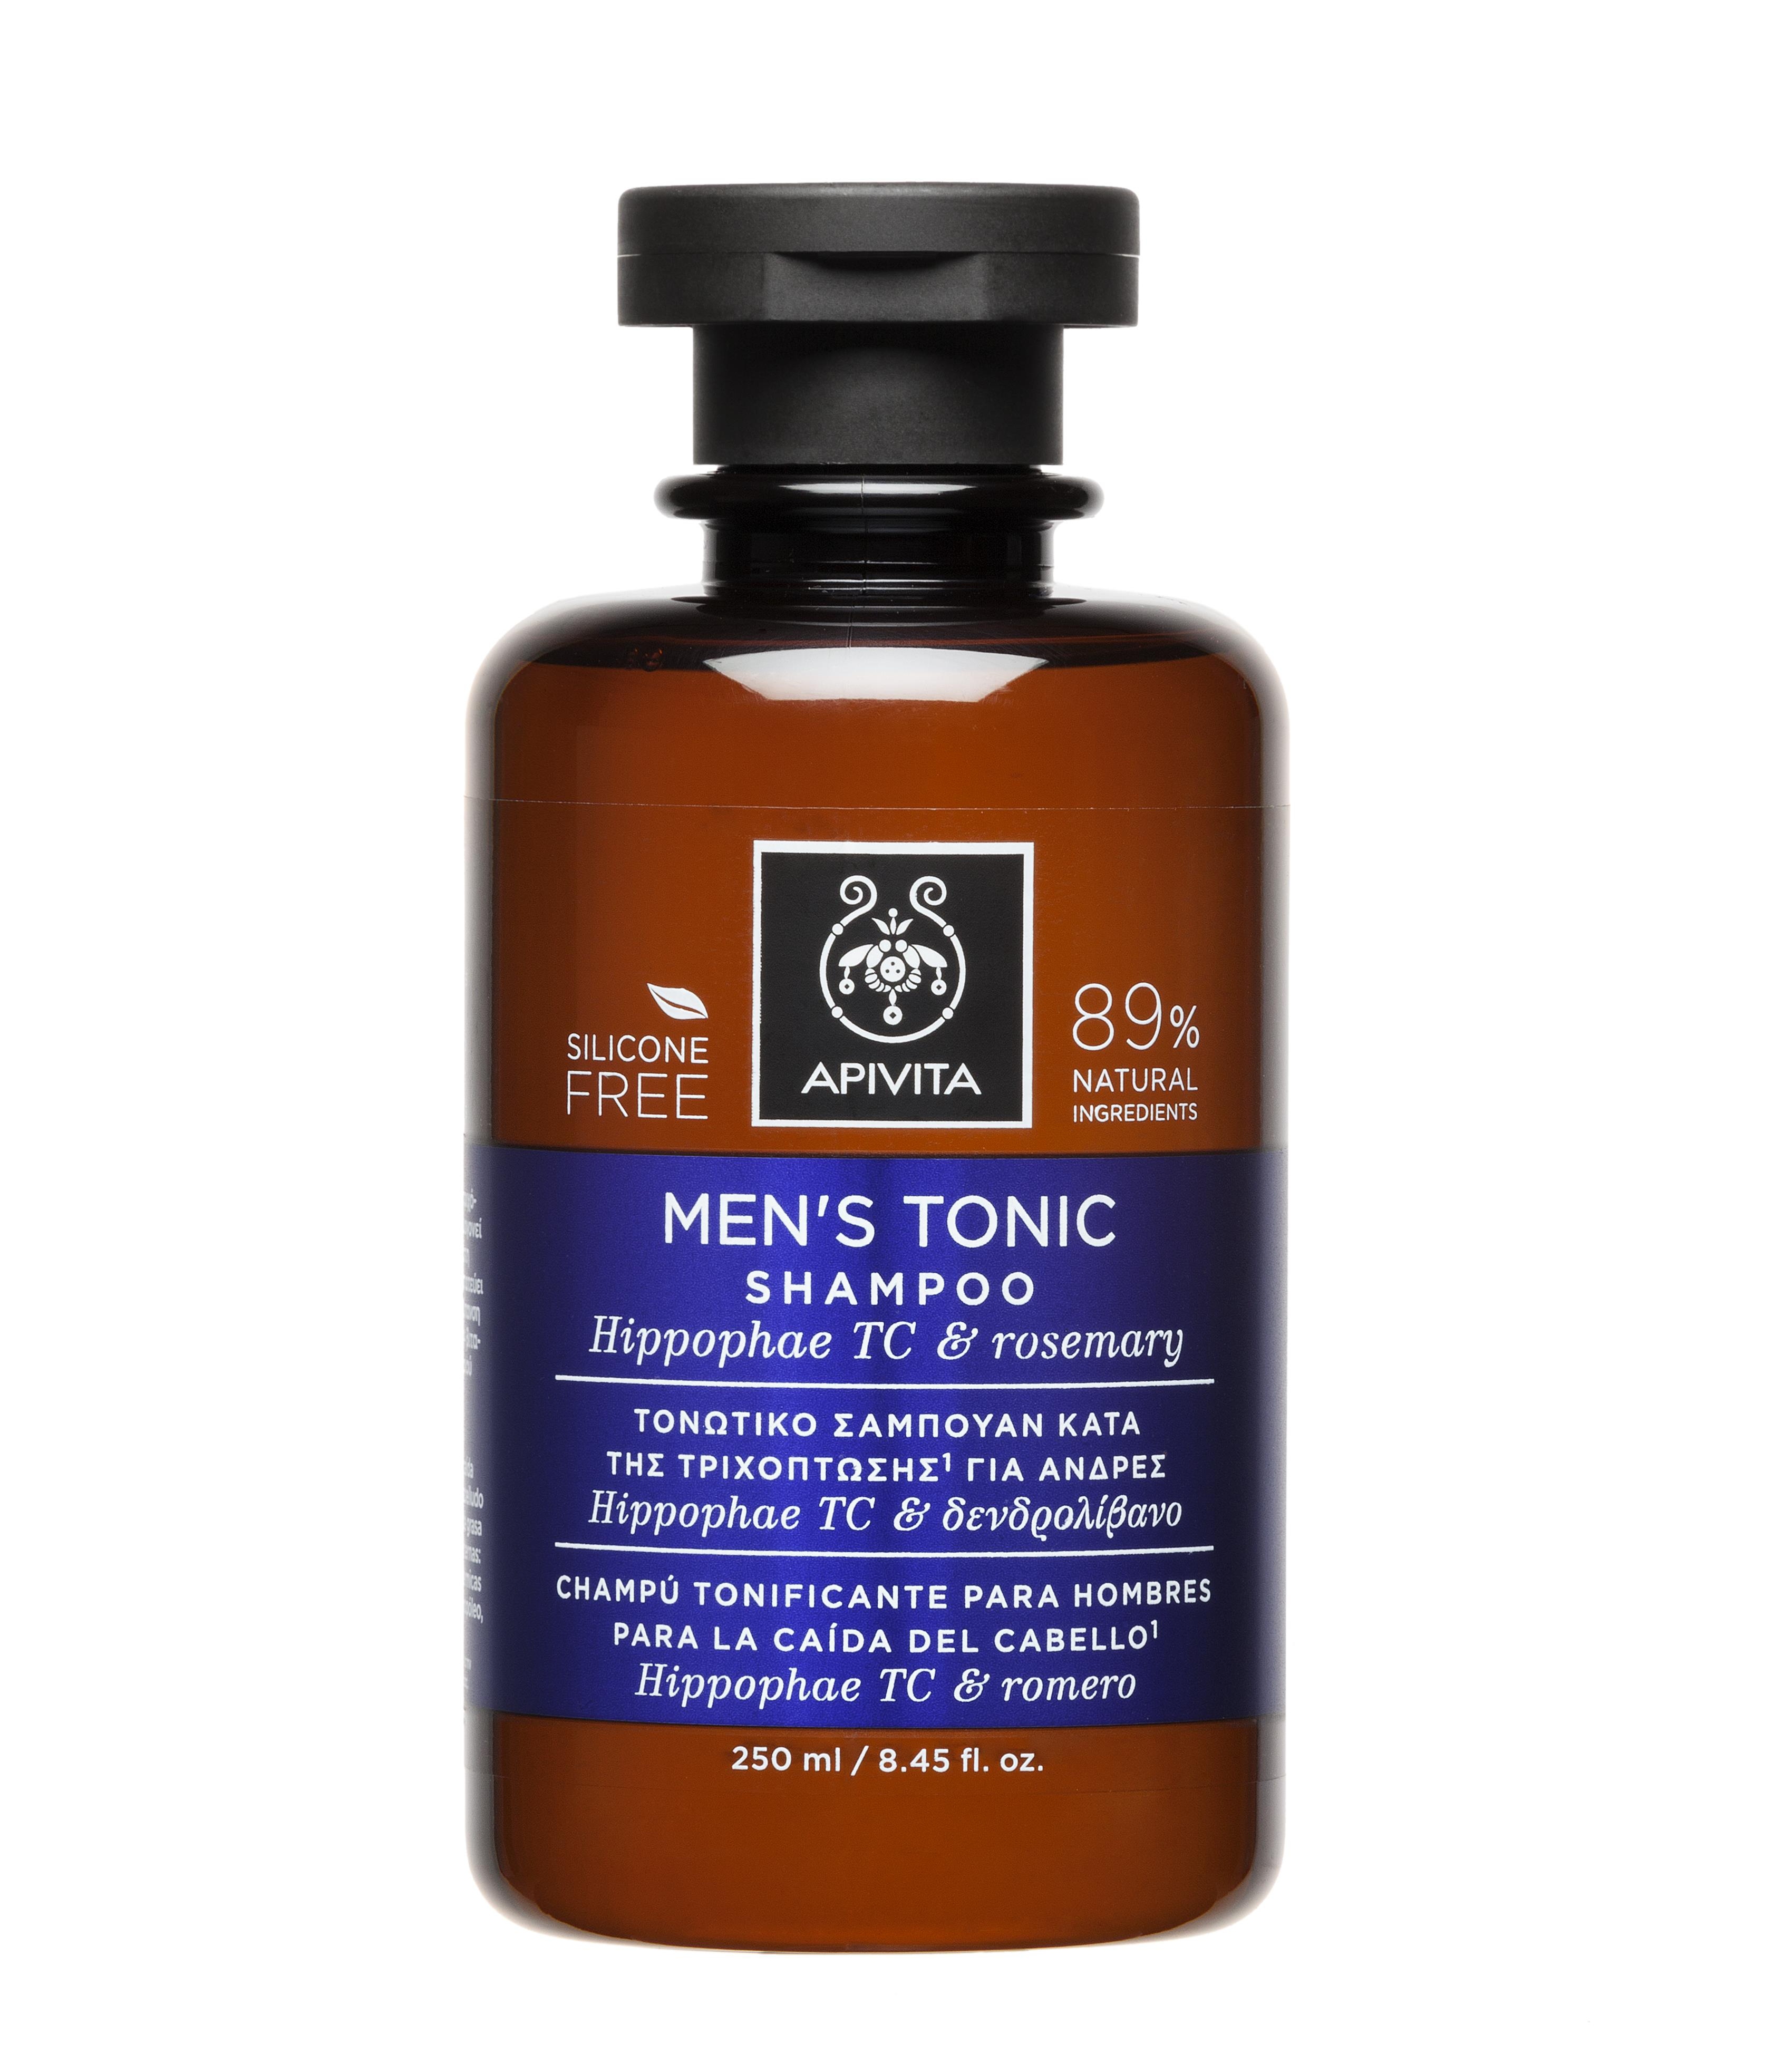 APIVITA Sampon hajhullás ellen férfiaknak - MEN'S TONIC 250ml